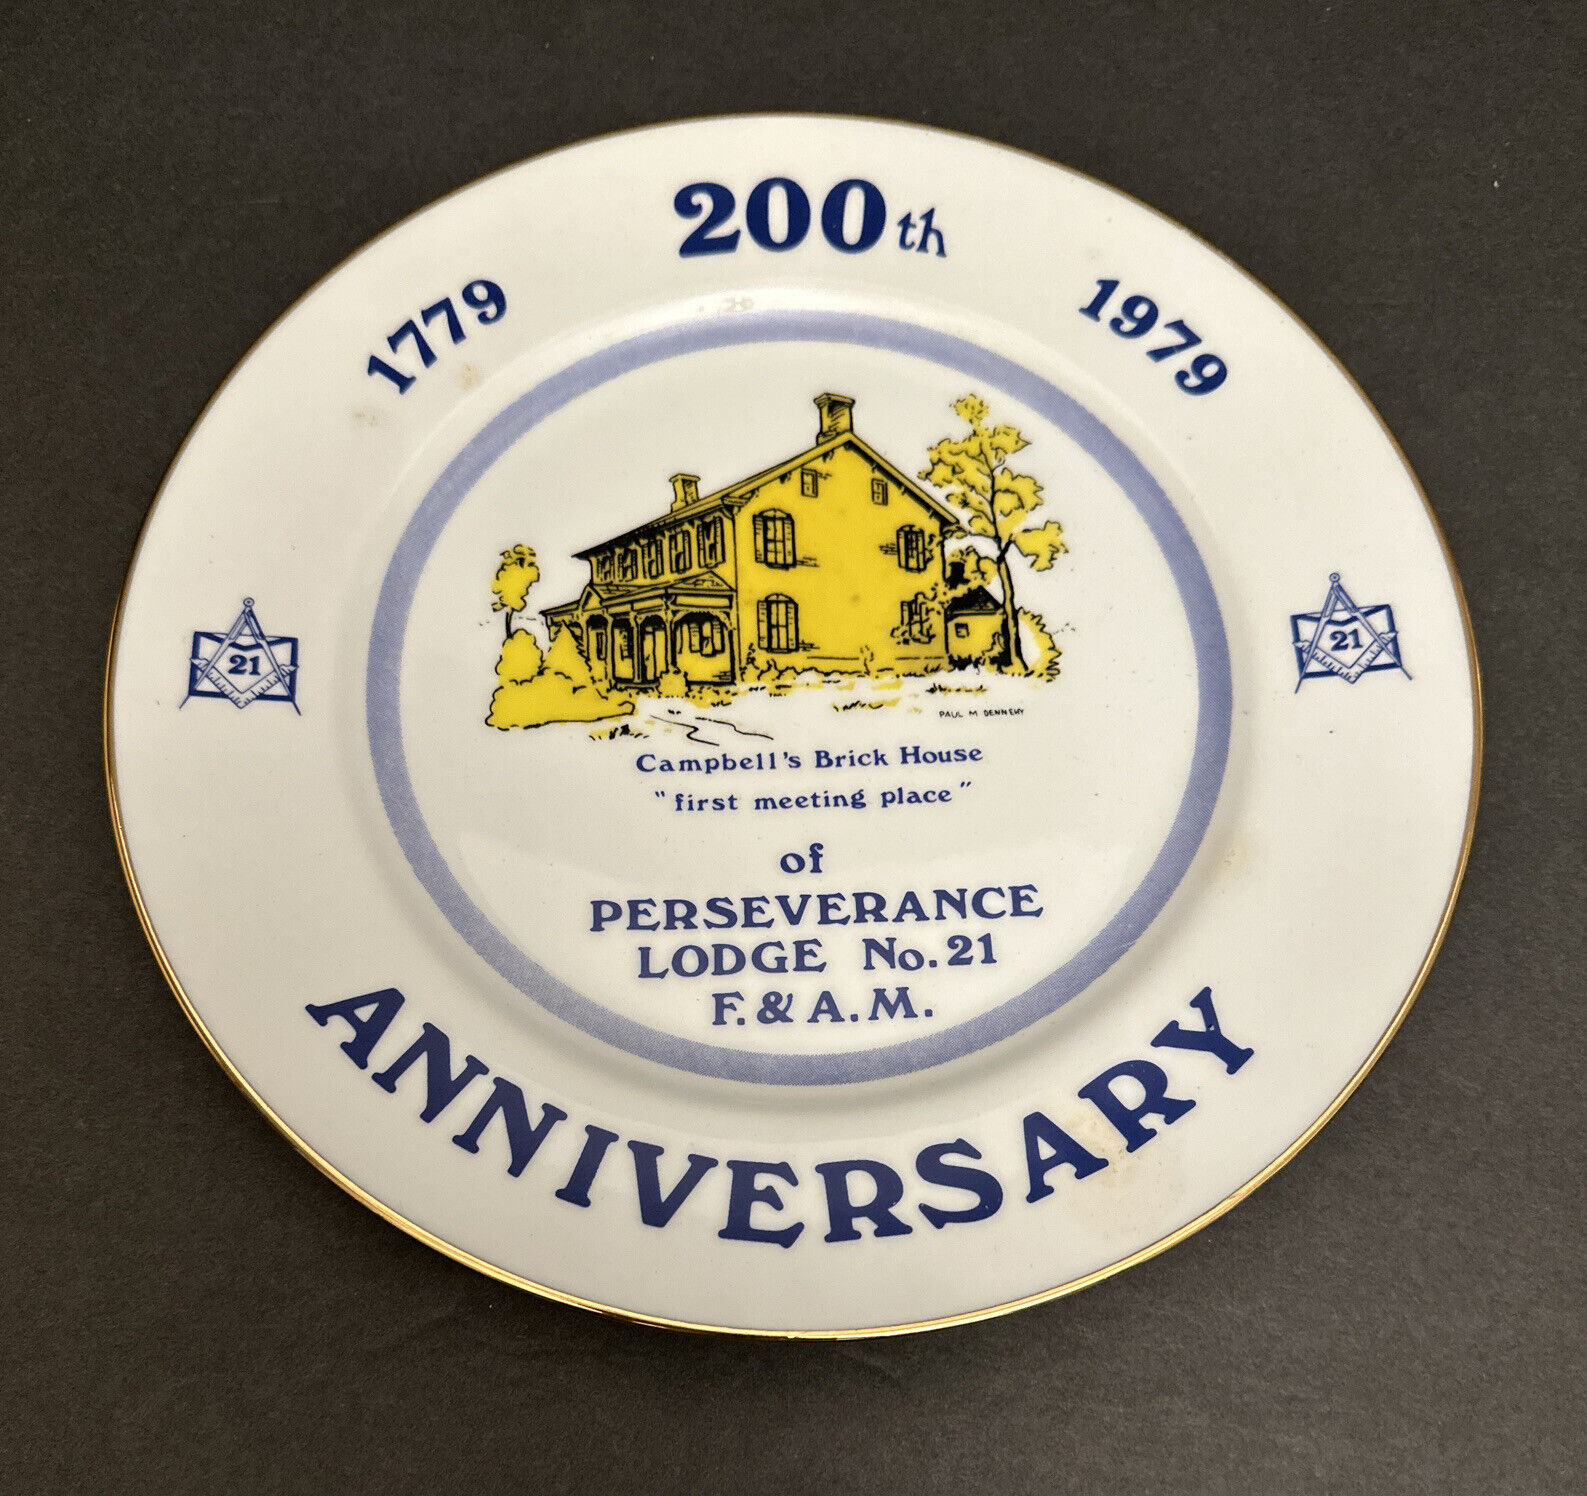  Perseverance Lodge No. 21 Masonic Plate ~ 200th  Anniversary Plate